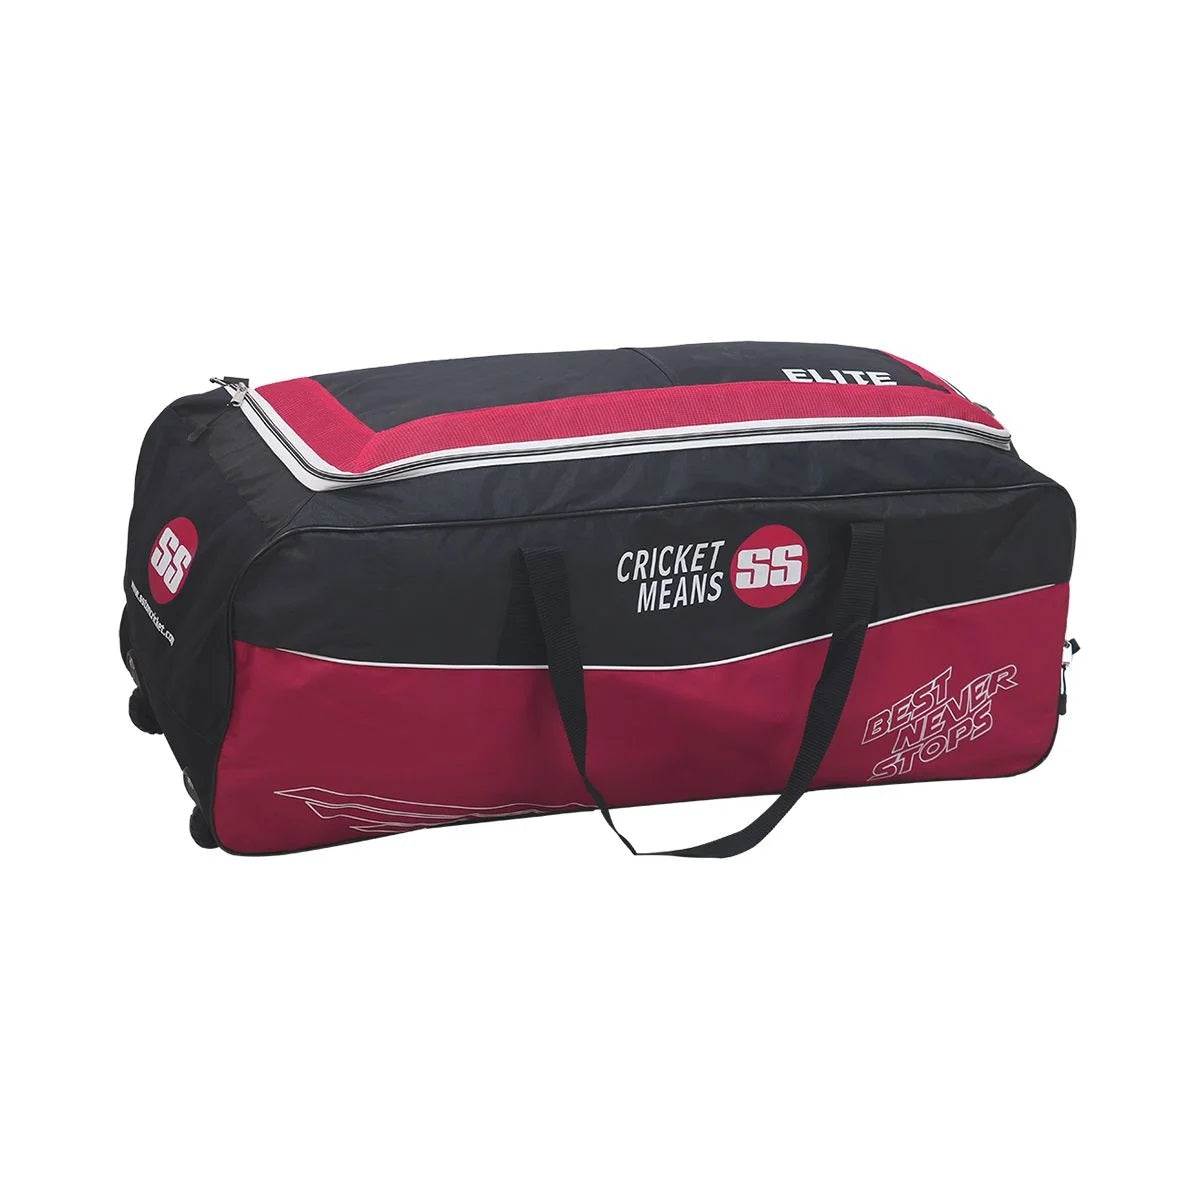 SS Elite Wheel Cricket Kit Bag - Best Price online Prokicksports.com